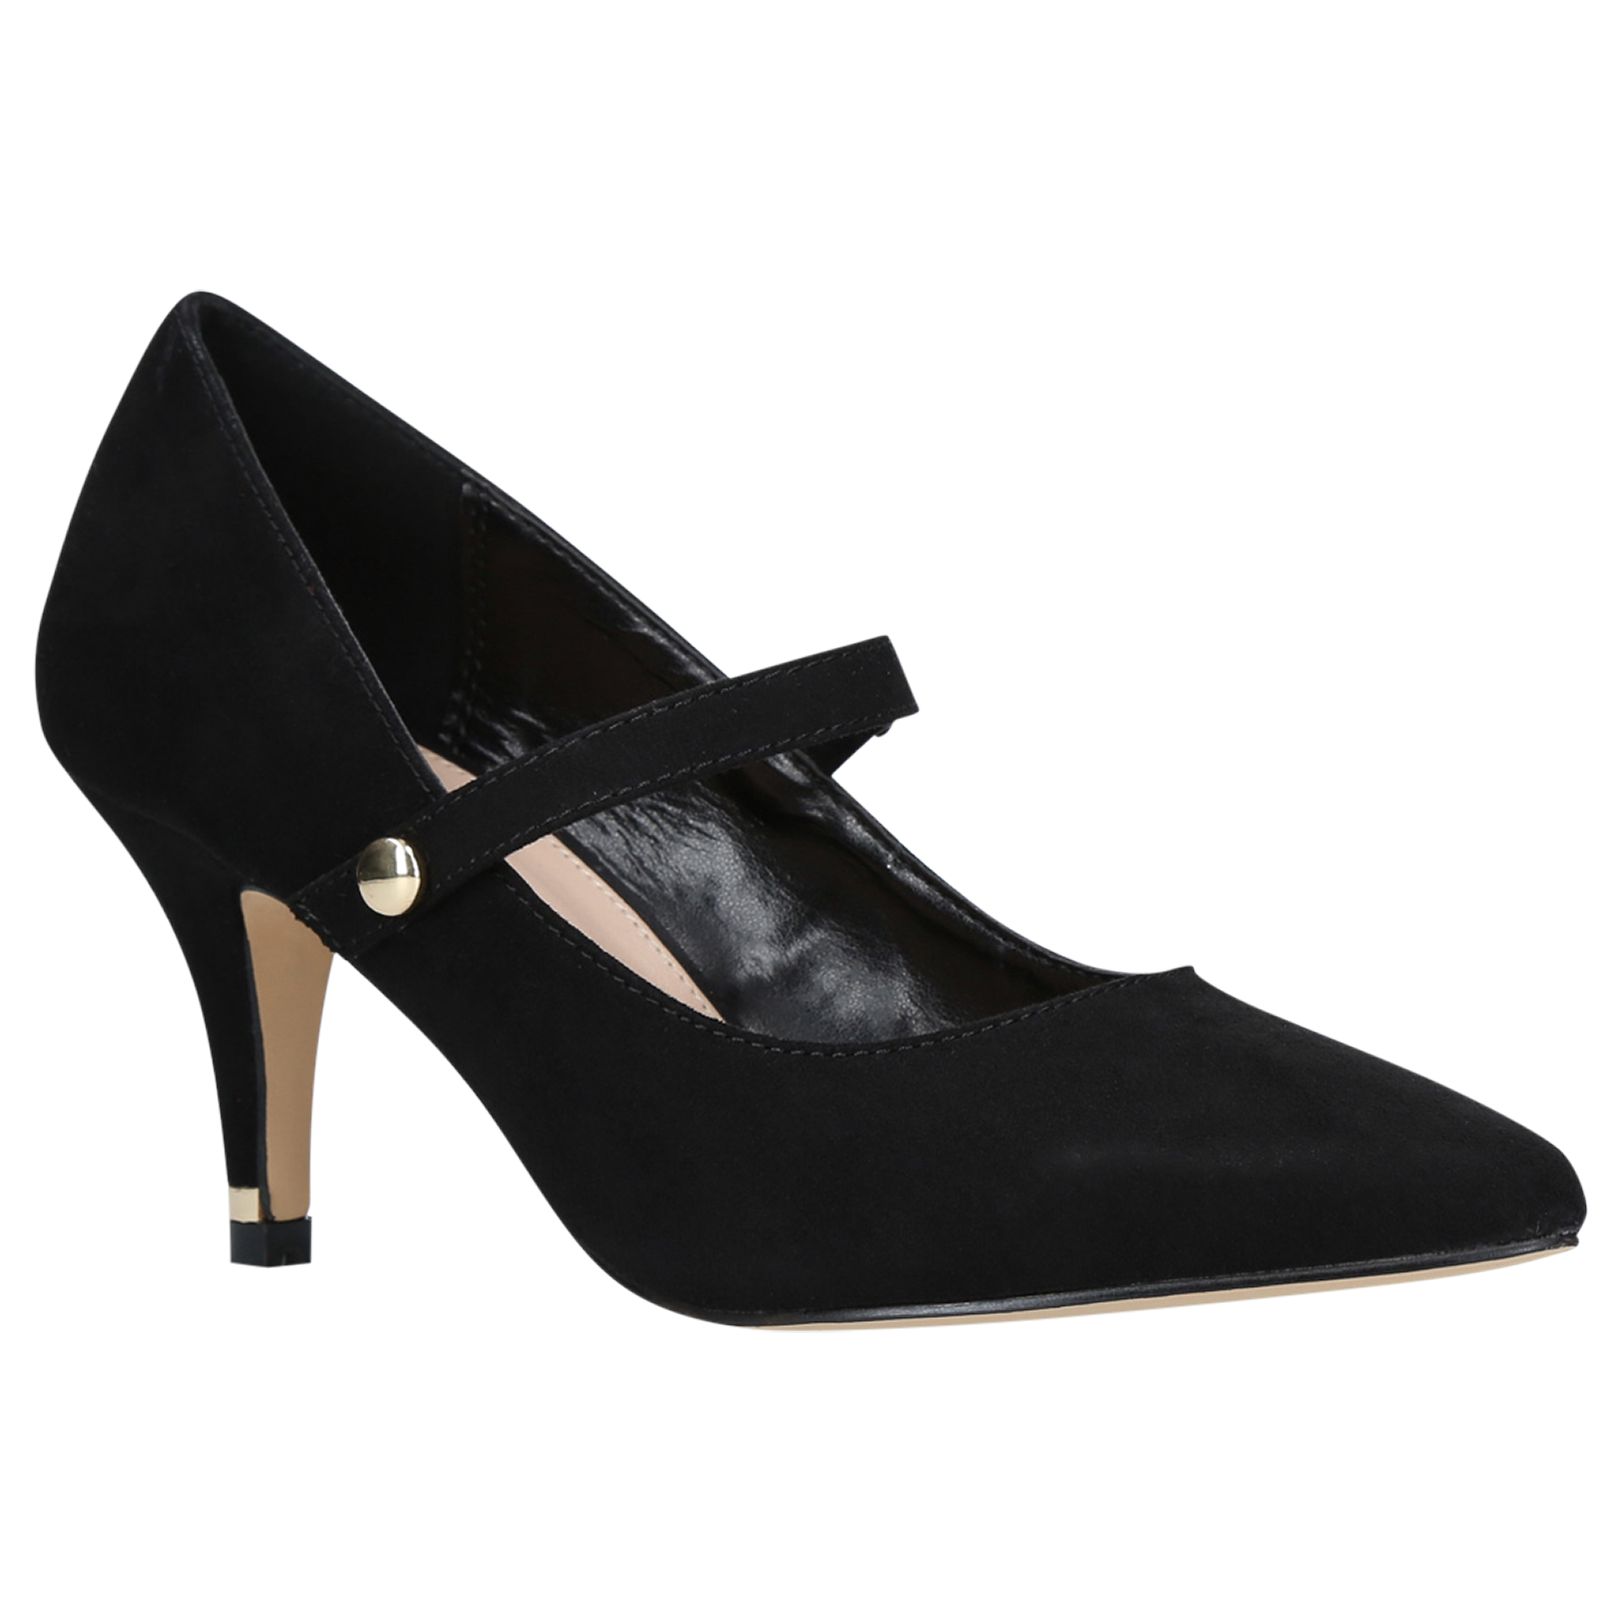 Carvela Kream Court Shoes, Black, 5